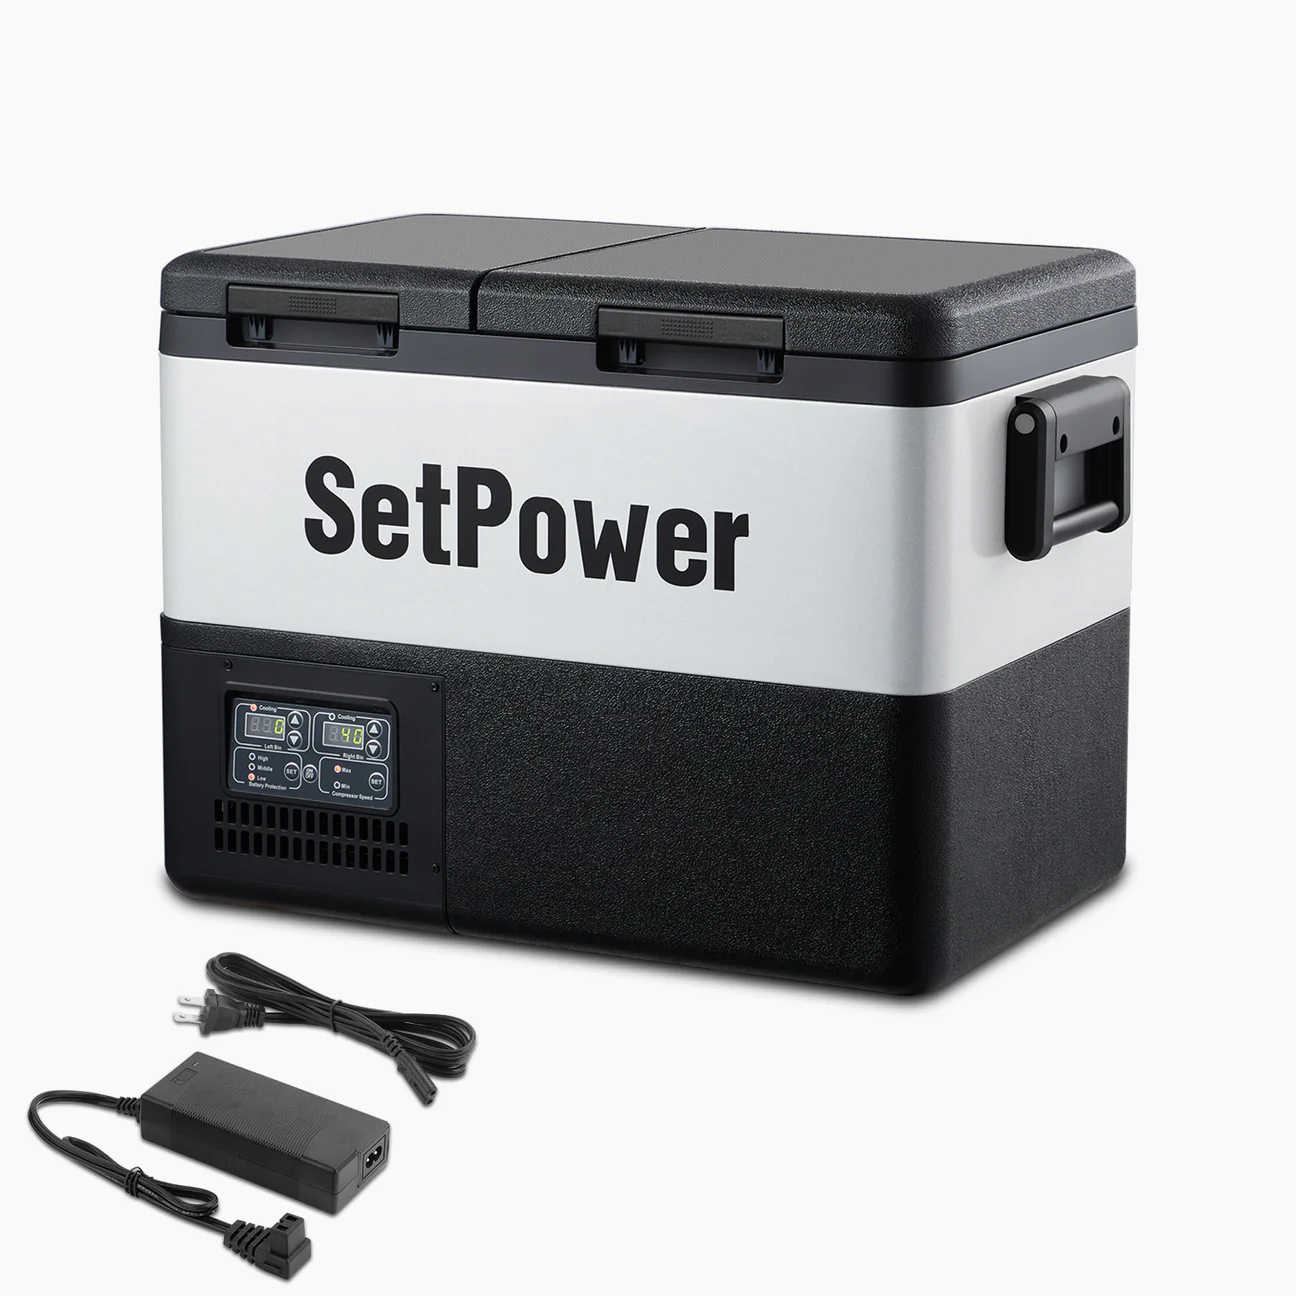 SetPower Portable Fridge-Freezer